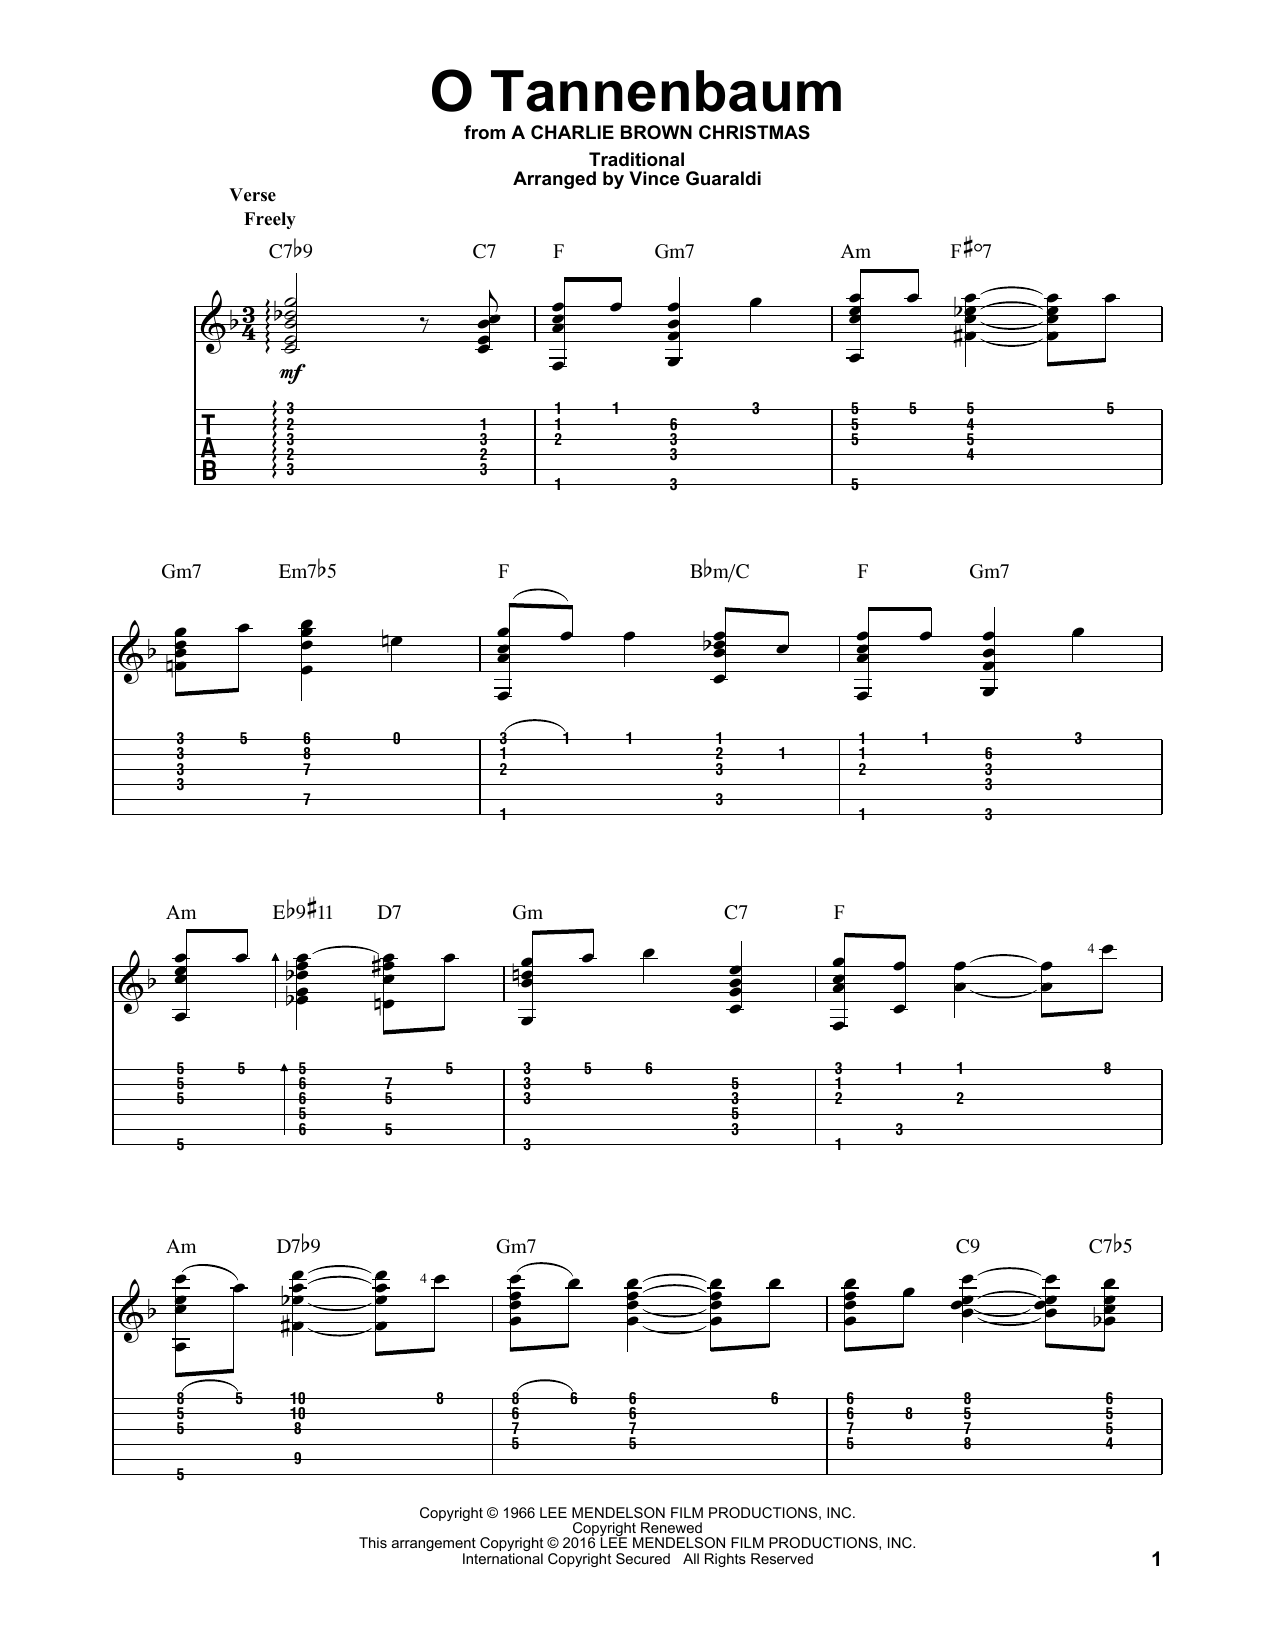 Vince Guaraldi (arr.) O Tannenbaum Sheet Music Notes & Chords for Guitar Tab - Download or Print PDF